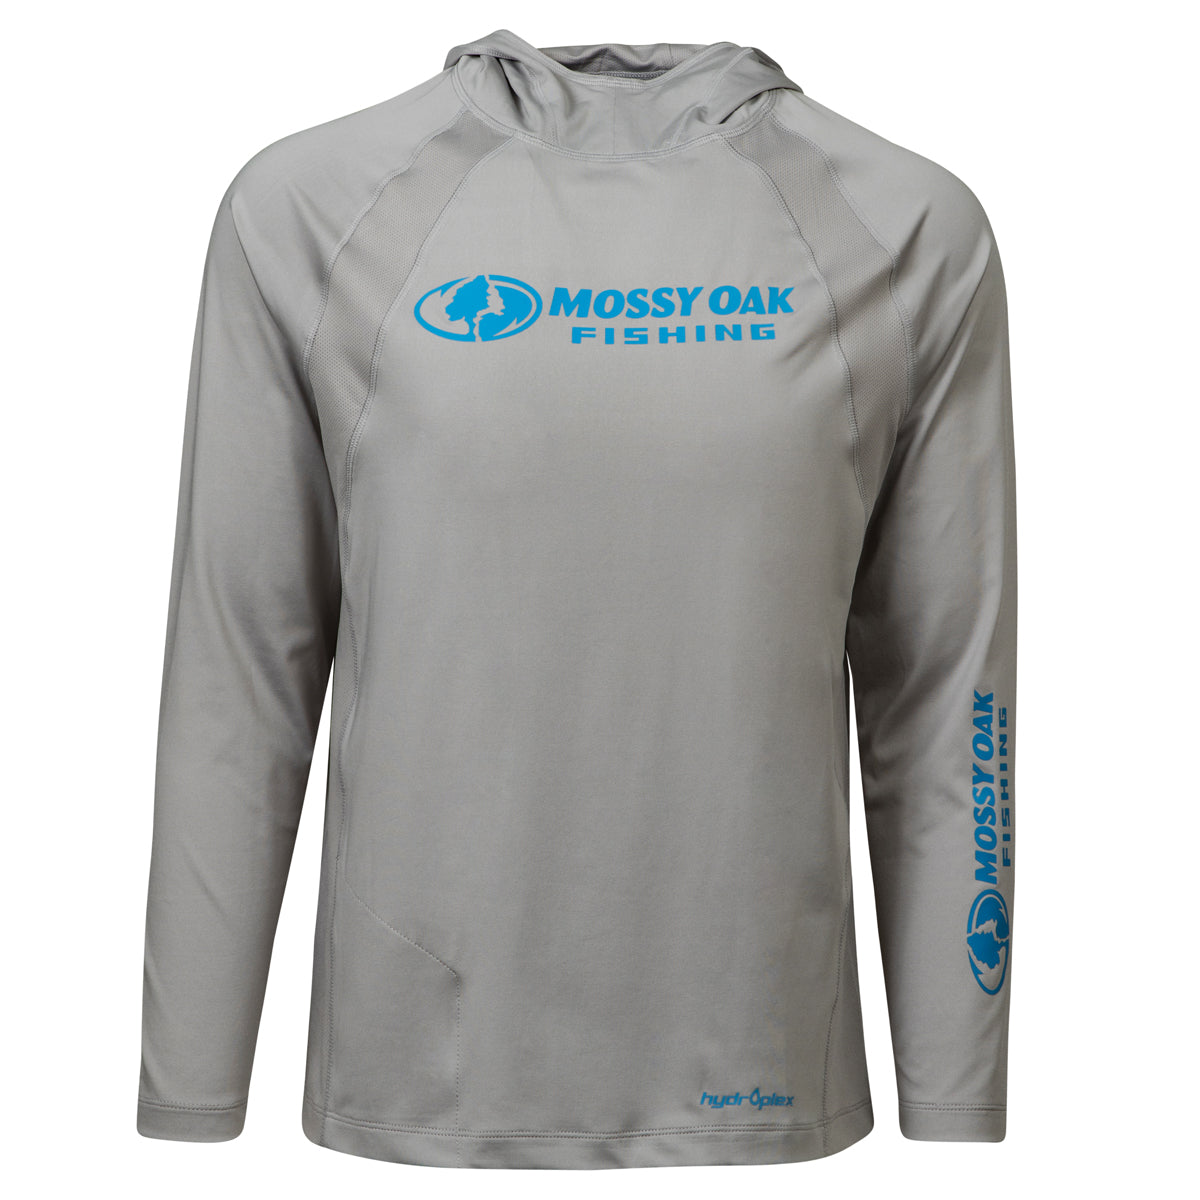 Mossy Oak Fishing Hoodie, Fishing Hoodies for Men - UV Protection